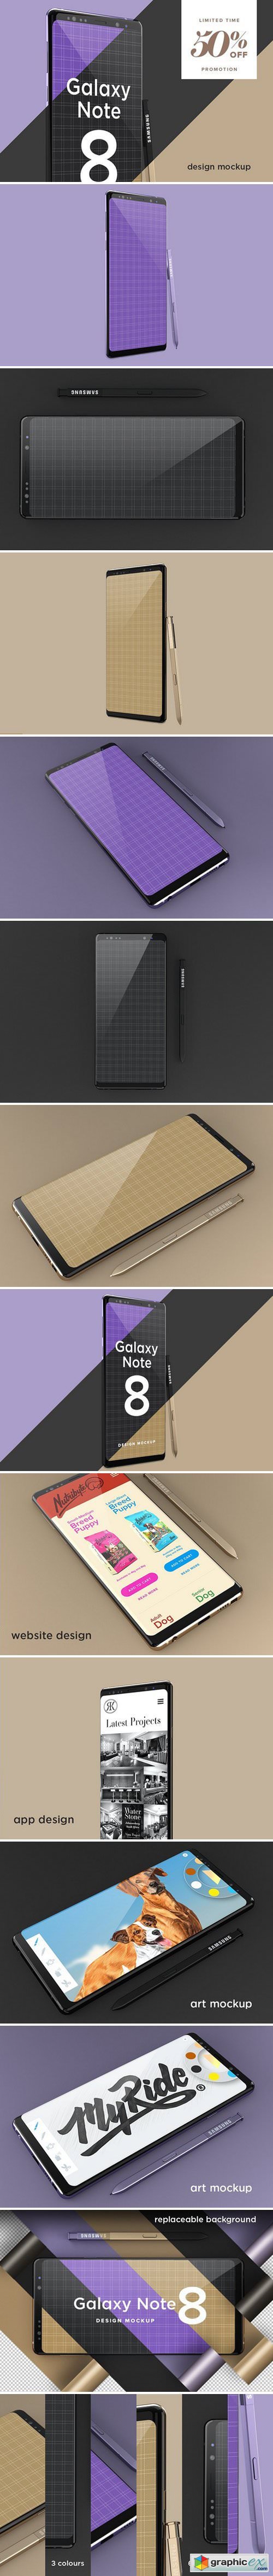 Samsung Galaxy Note 8 Design Mockup